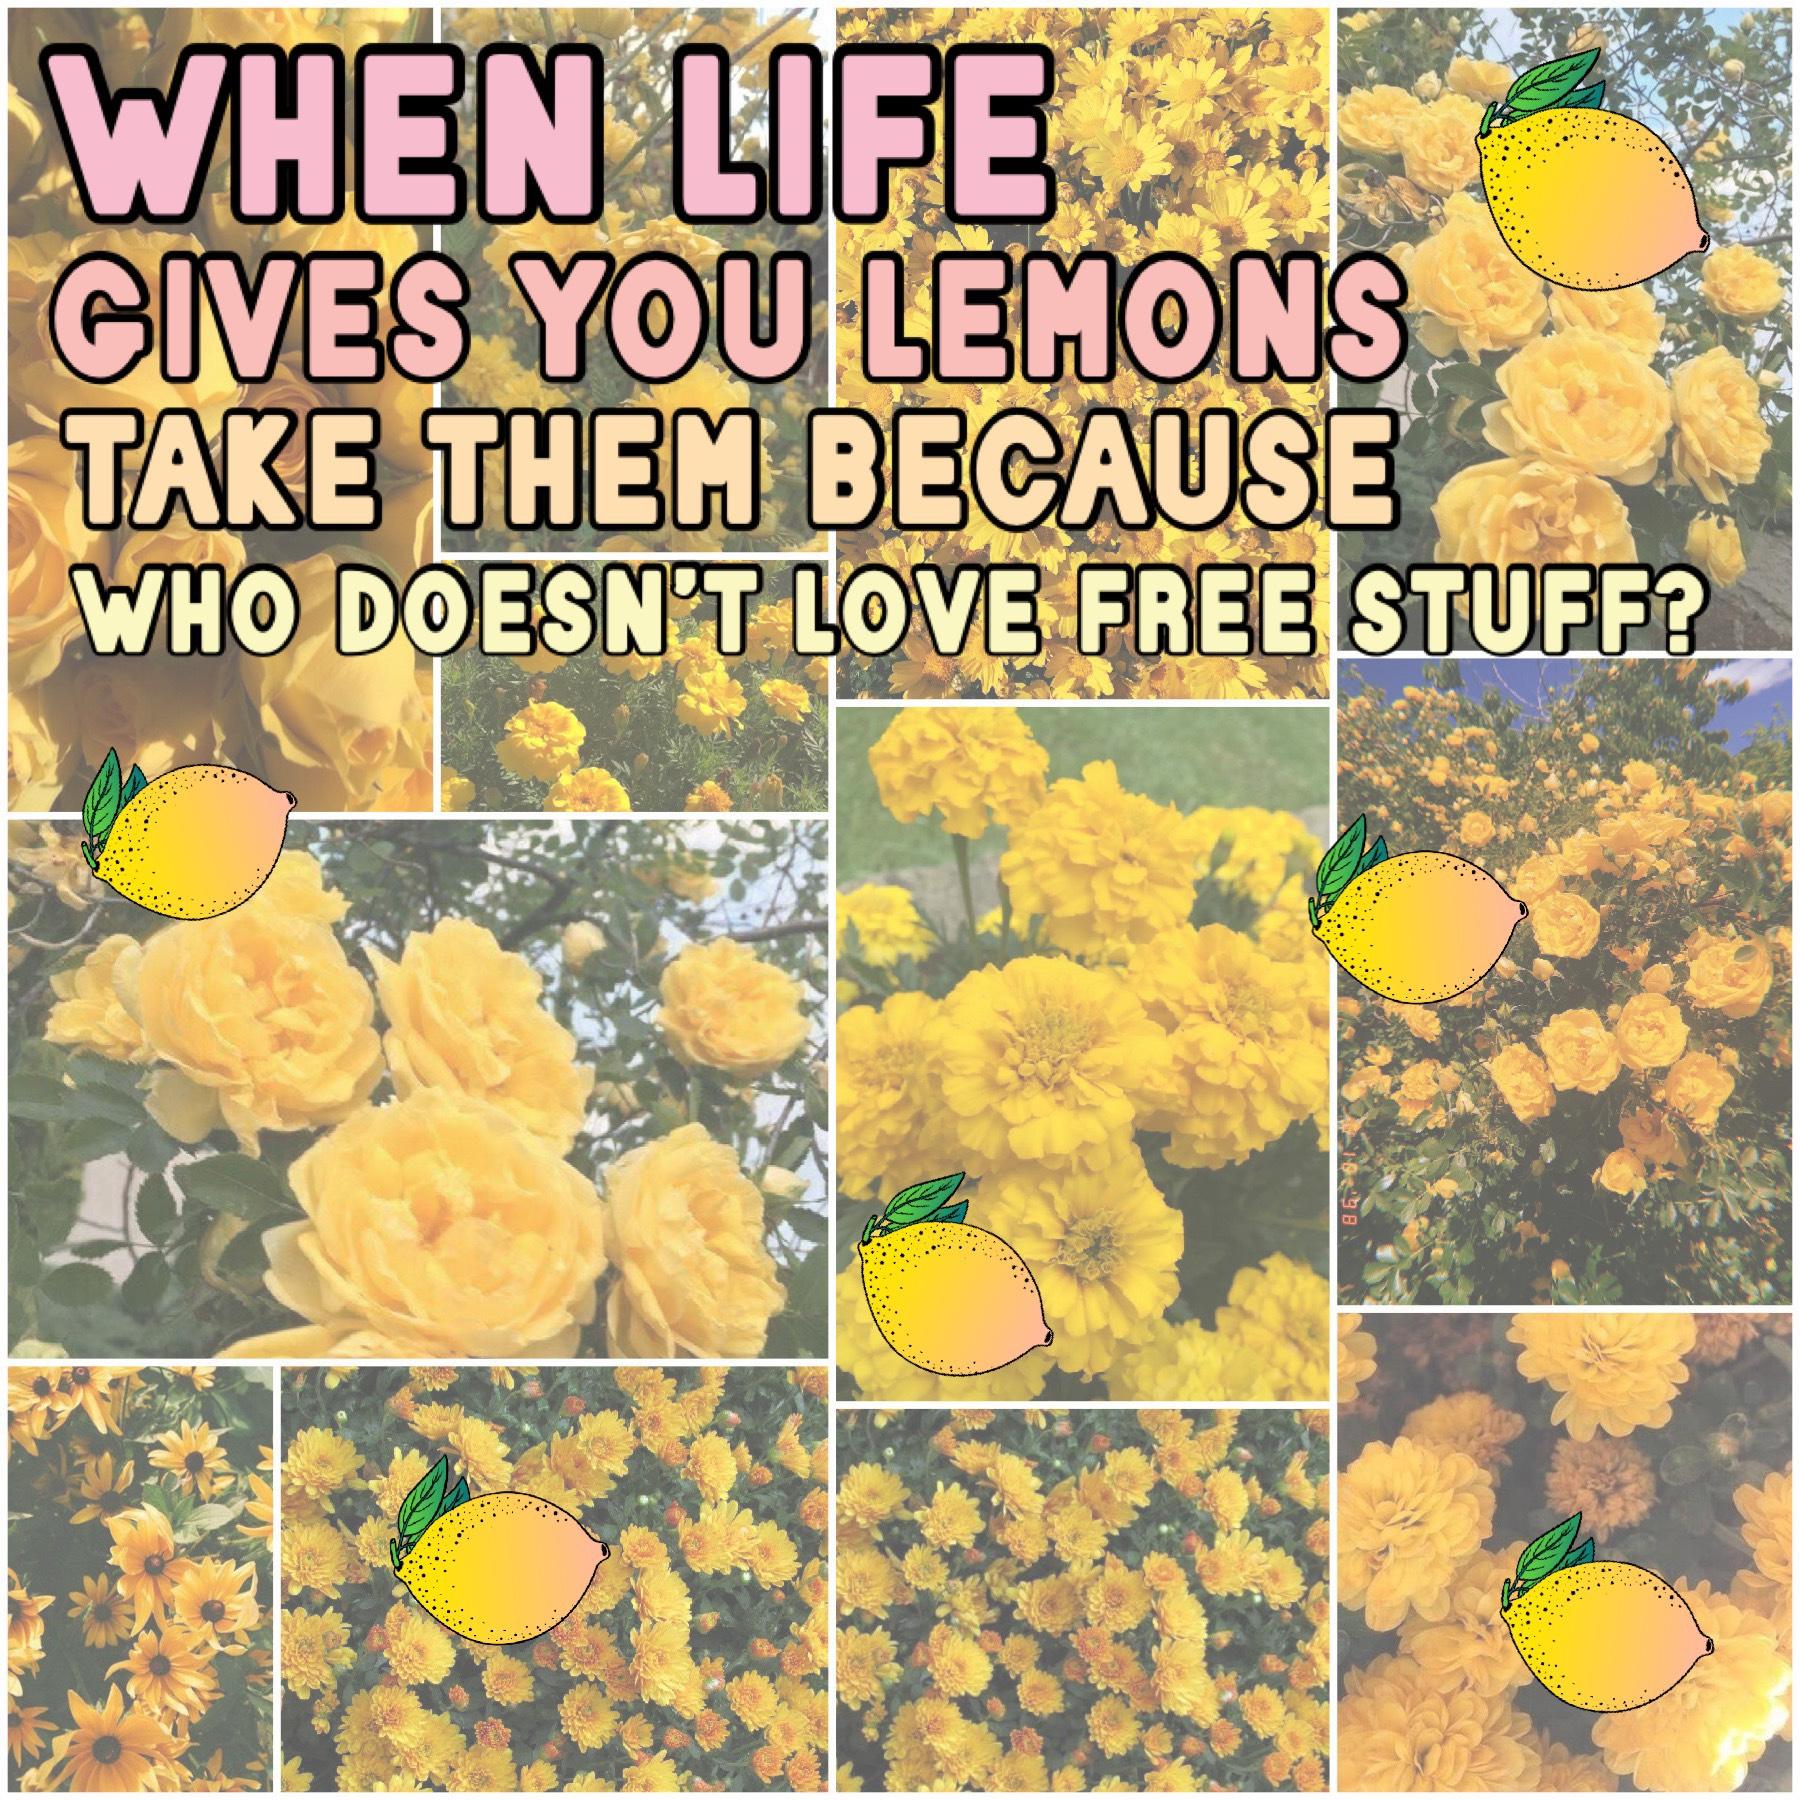 don’t just make lemonade, make orange juice because maybe life gave you oranges too